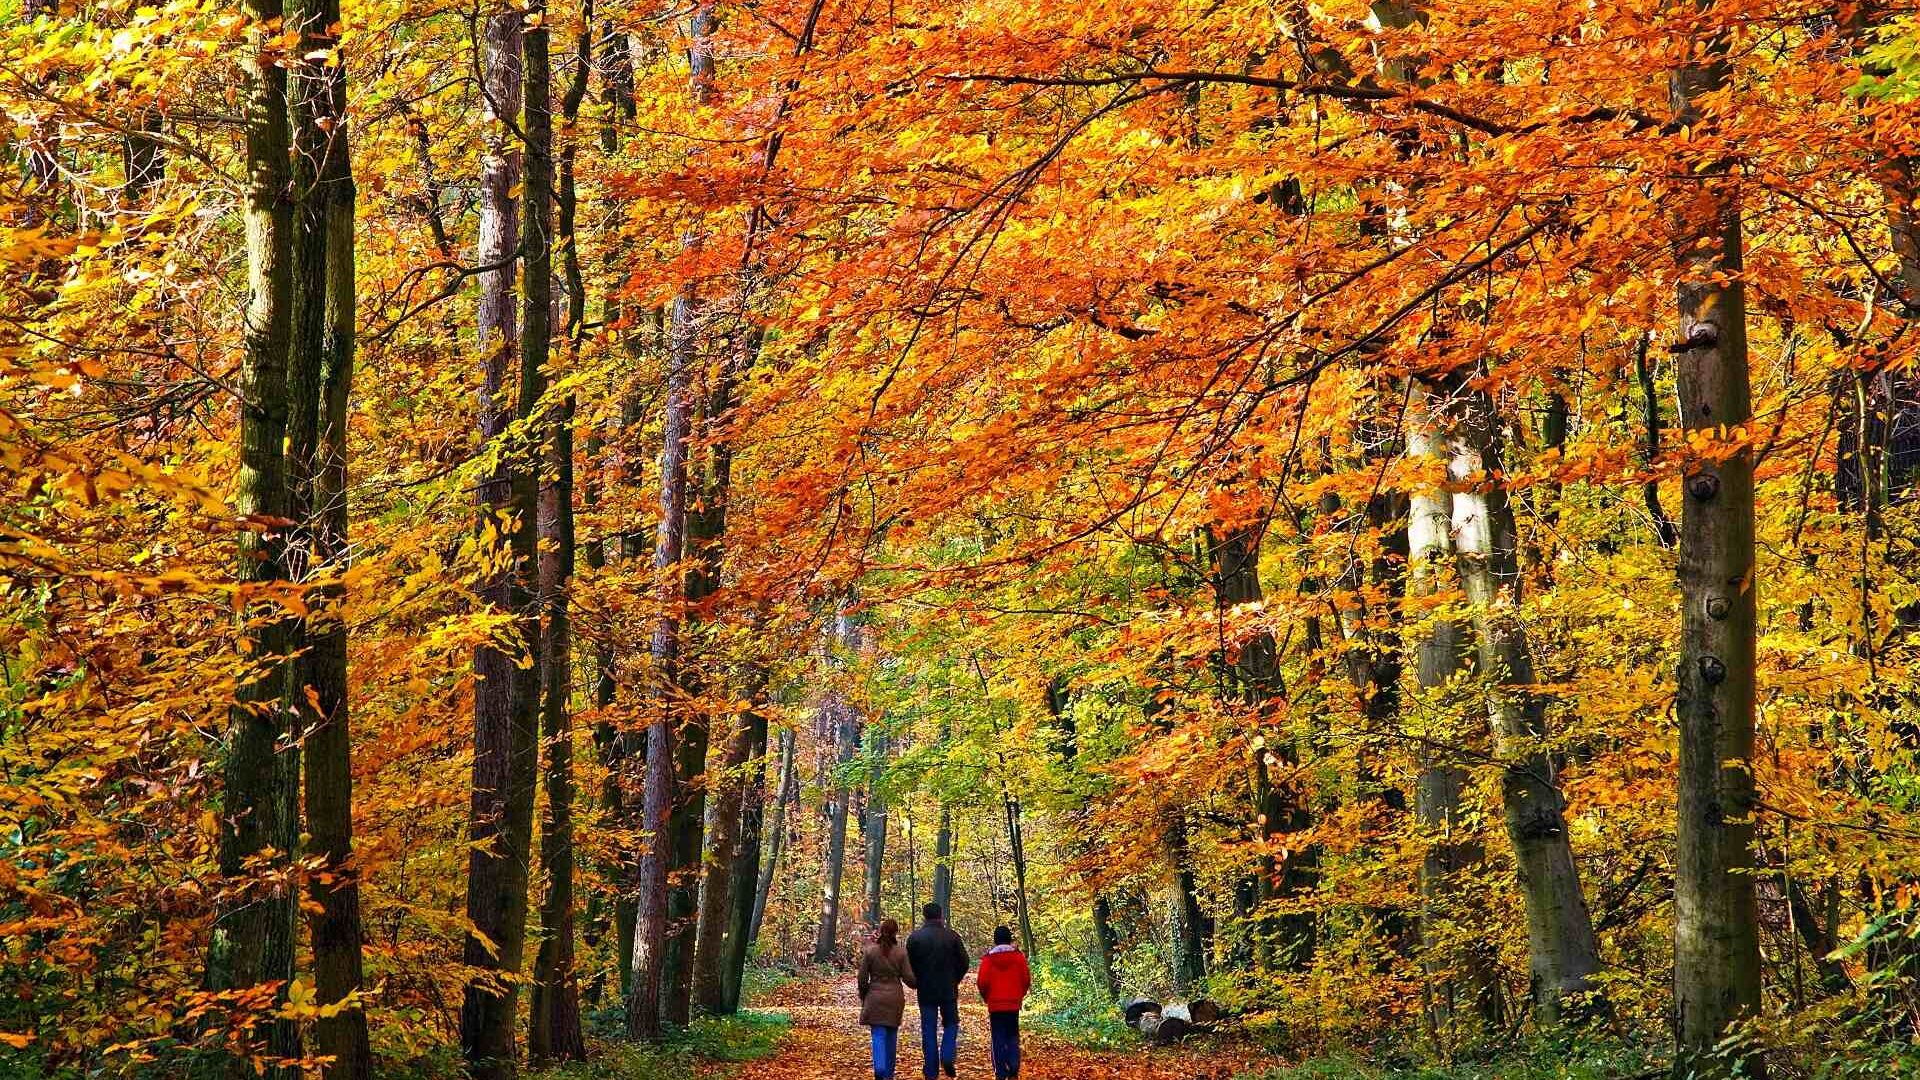 walk through autumn woods during october half term